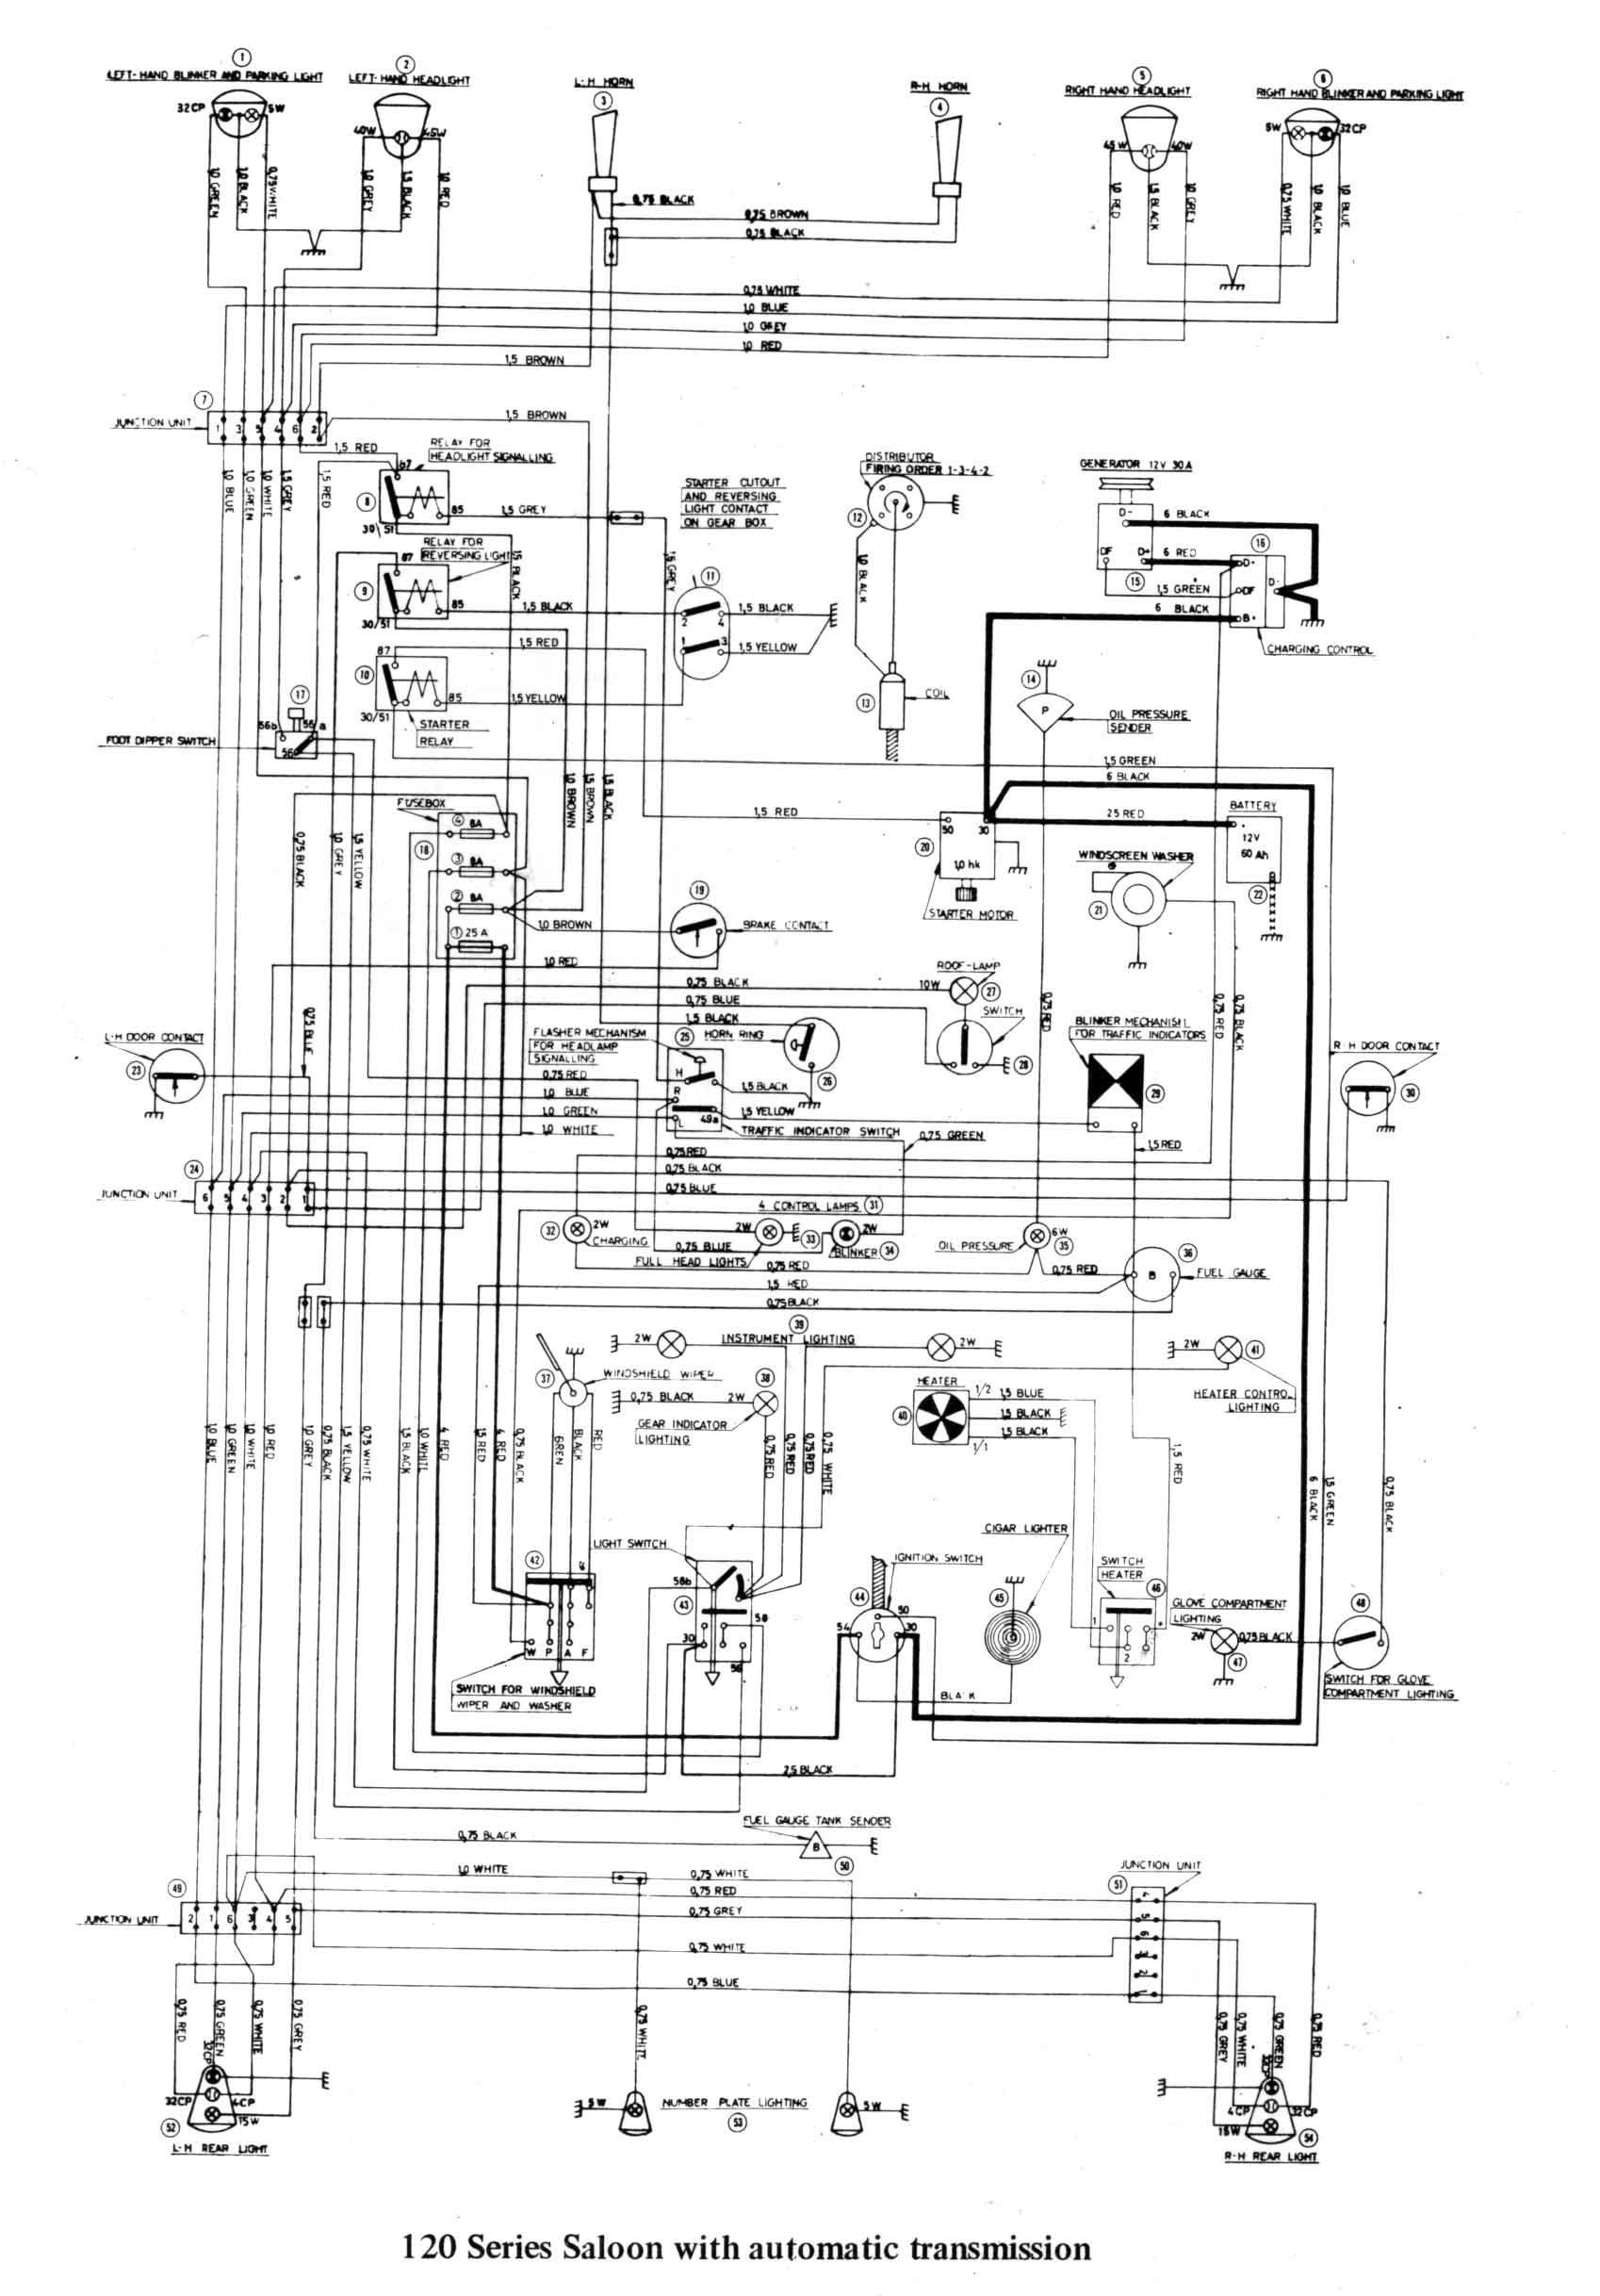 1995 Gmc Sierra Wiring Diagram Best Wiring Diagram 2010 Dodge Ram 1500 for Simple Headlight 2004 Of 1995 Gmc Sierra Wiring Diagram